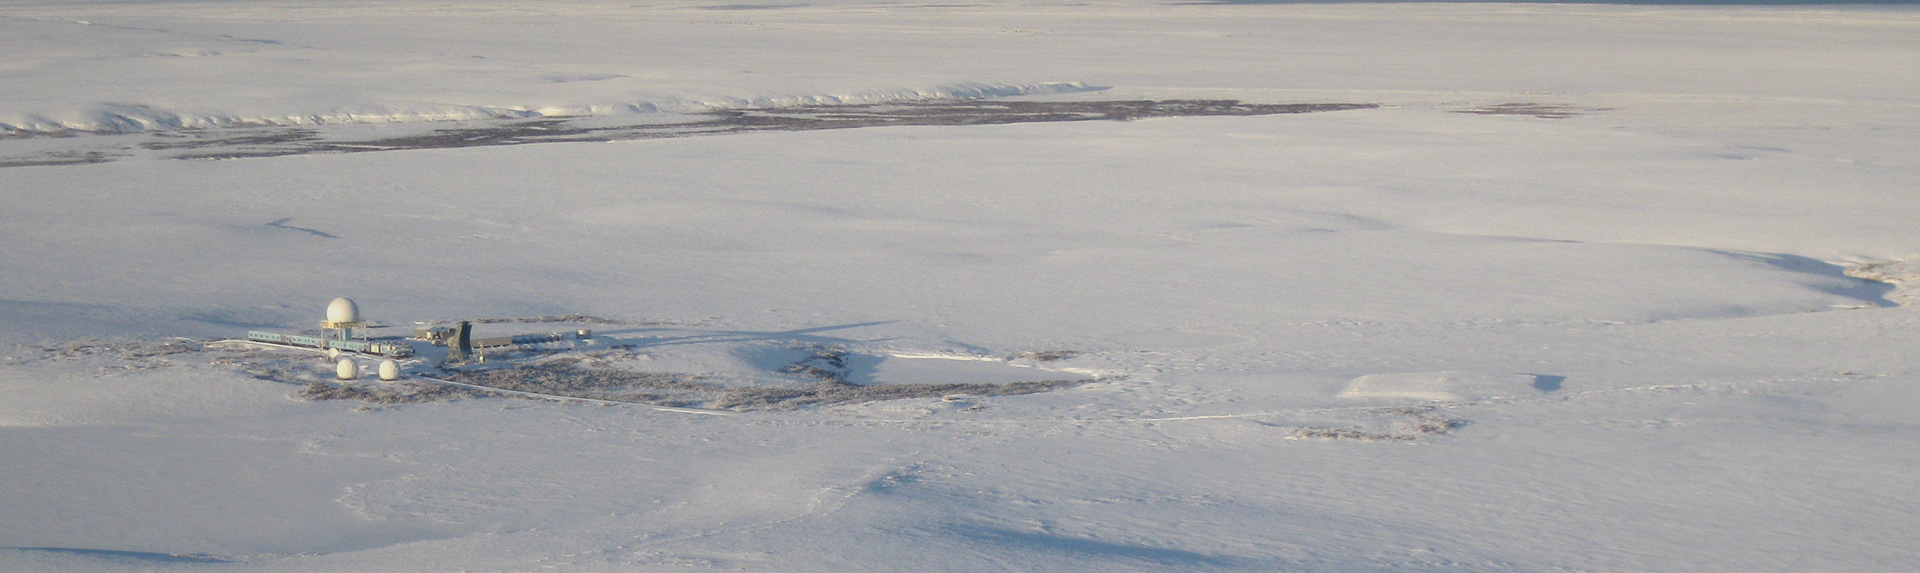 Tundra Drilling Landing